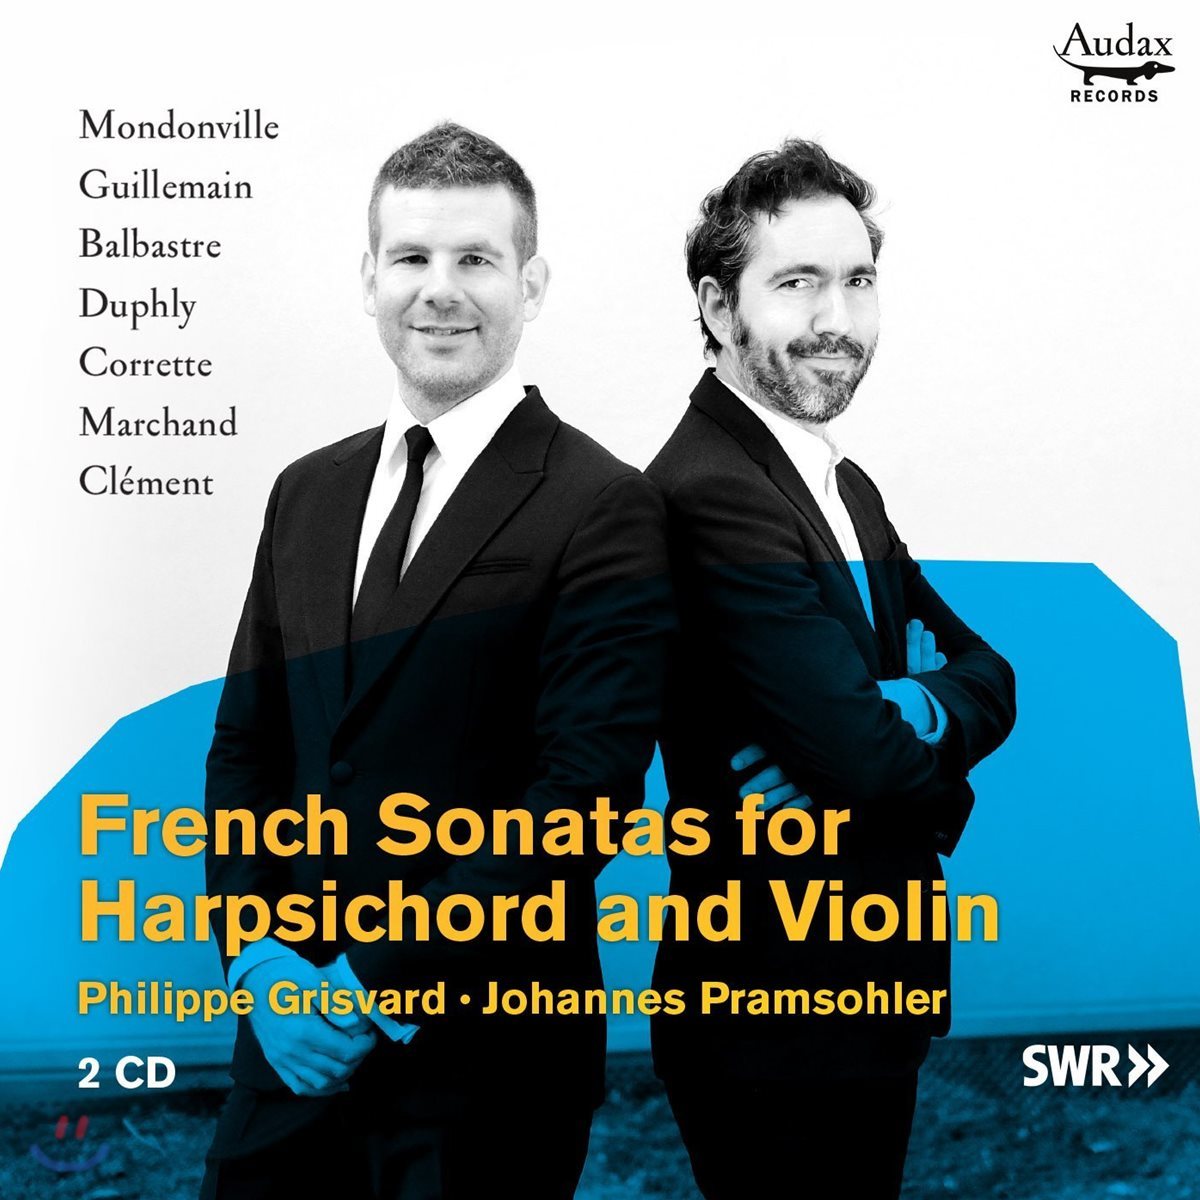 Johannes Pramsohler 쳄발로와 바이올린을 위한 프랑스의 소나타 - 몽동빌 / 길맹 / 코레트 외 (French Sonatas for Harpsichord and Violin)